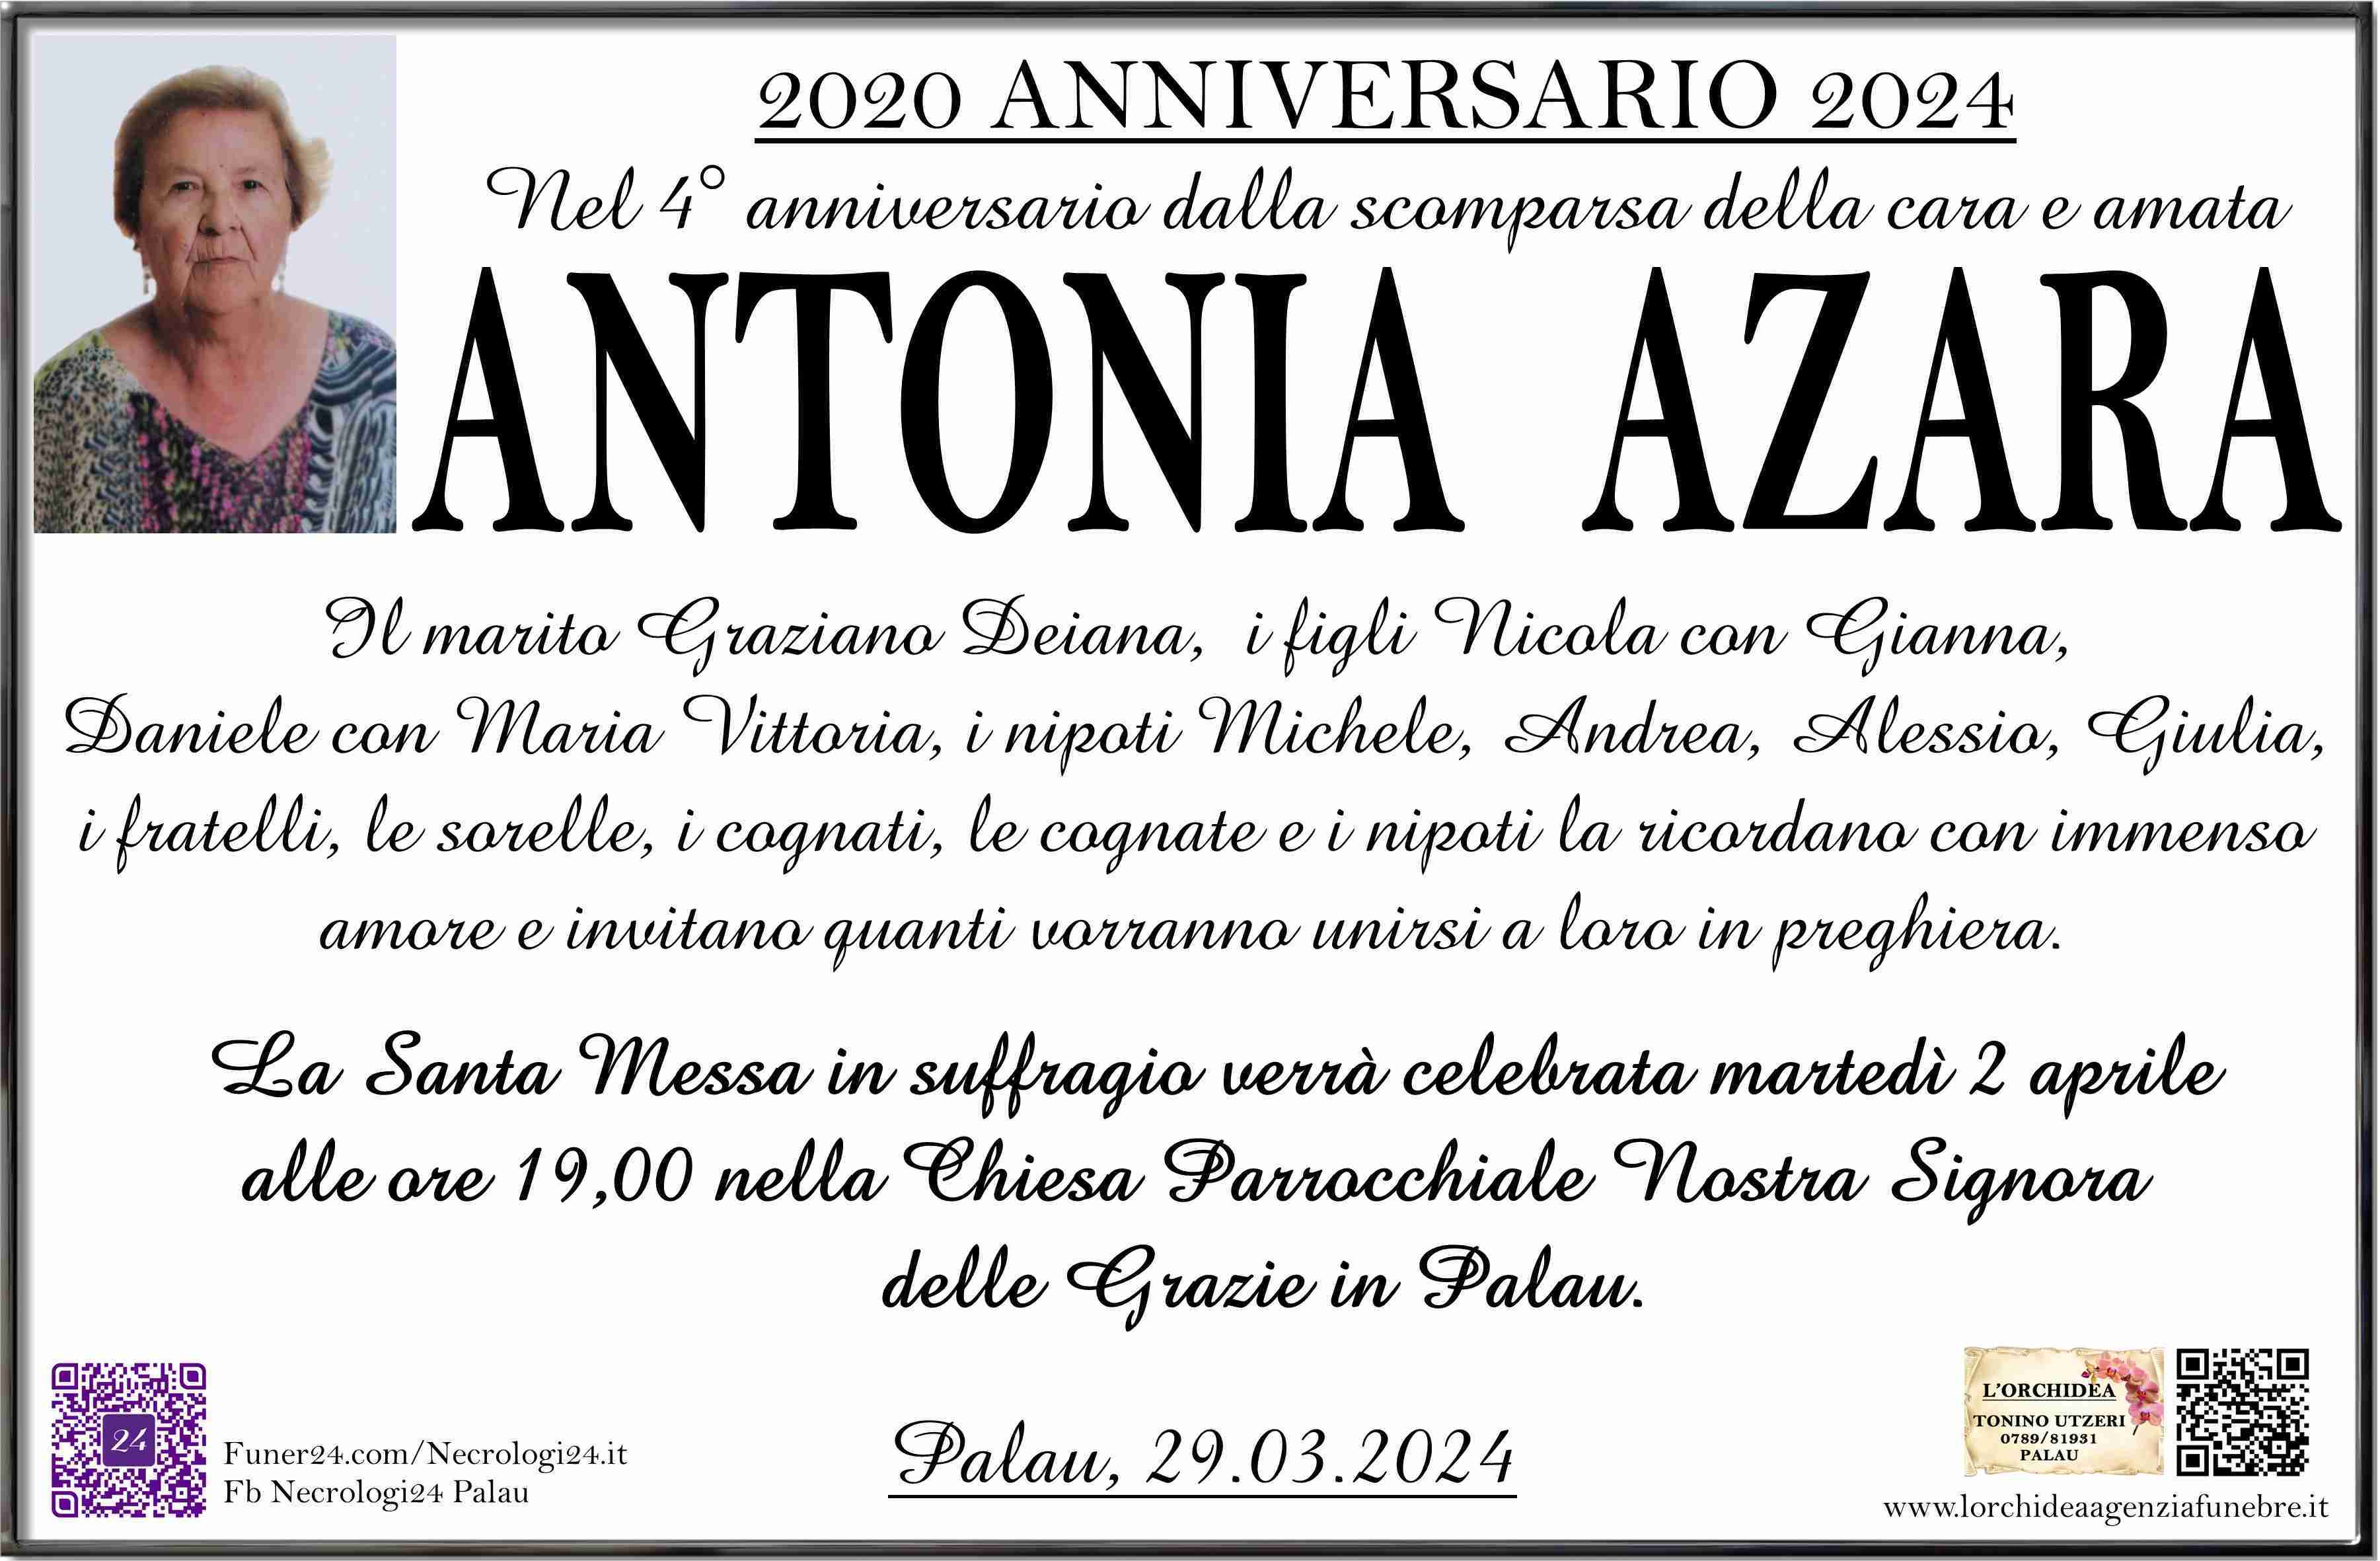 Antonia Azara